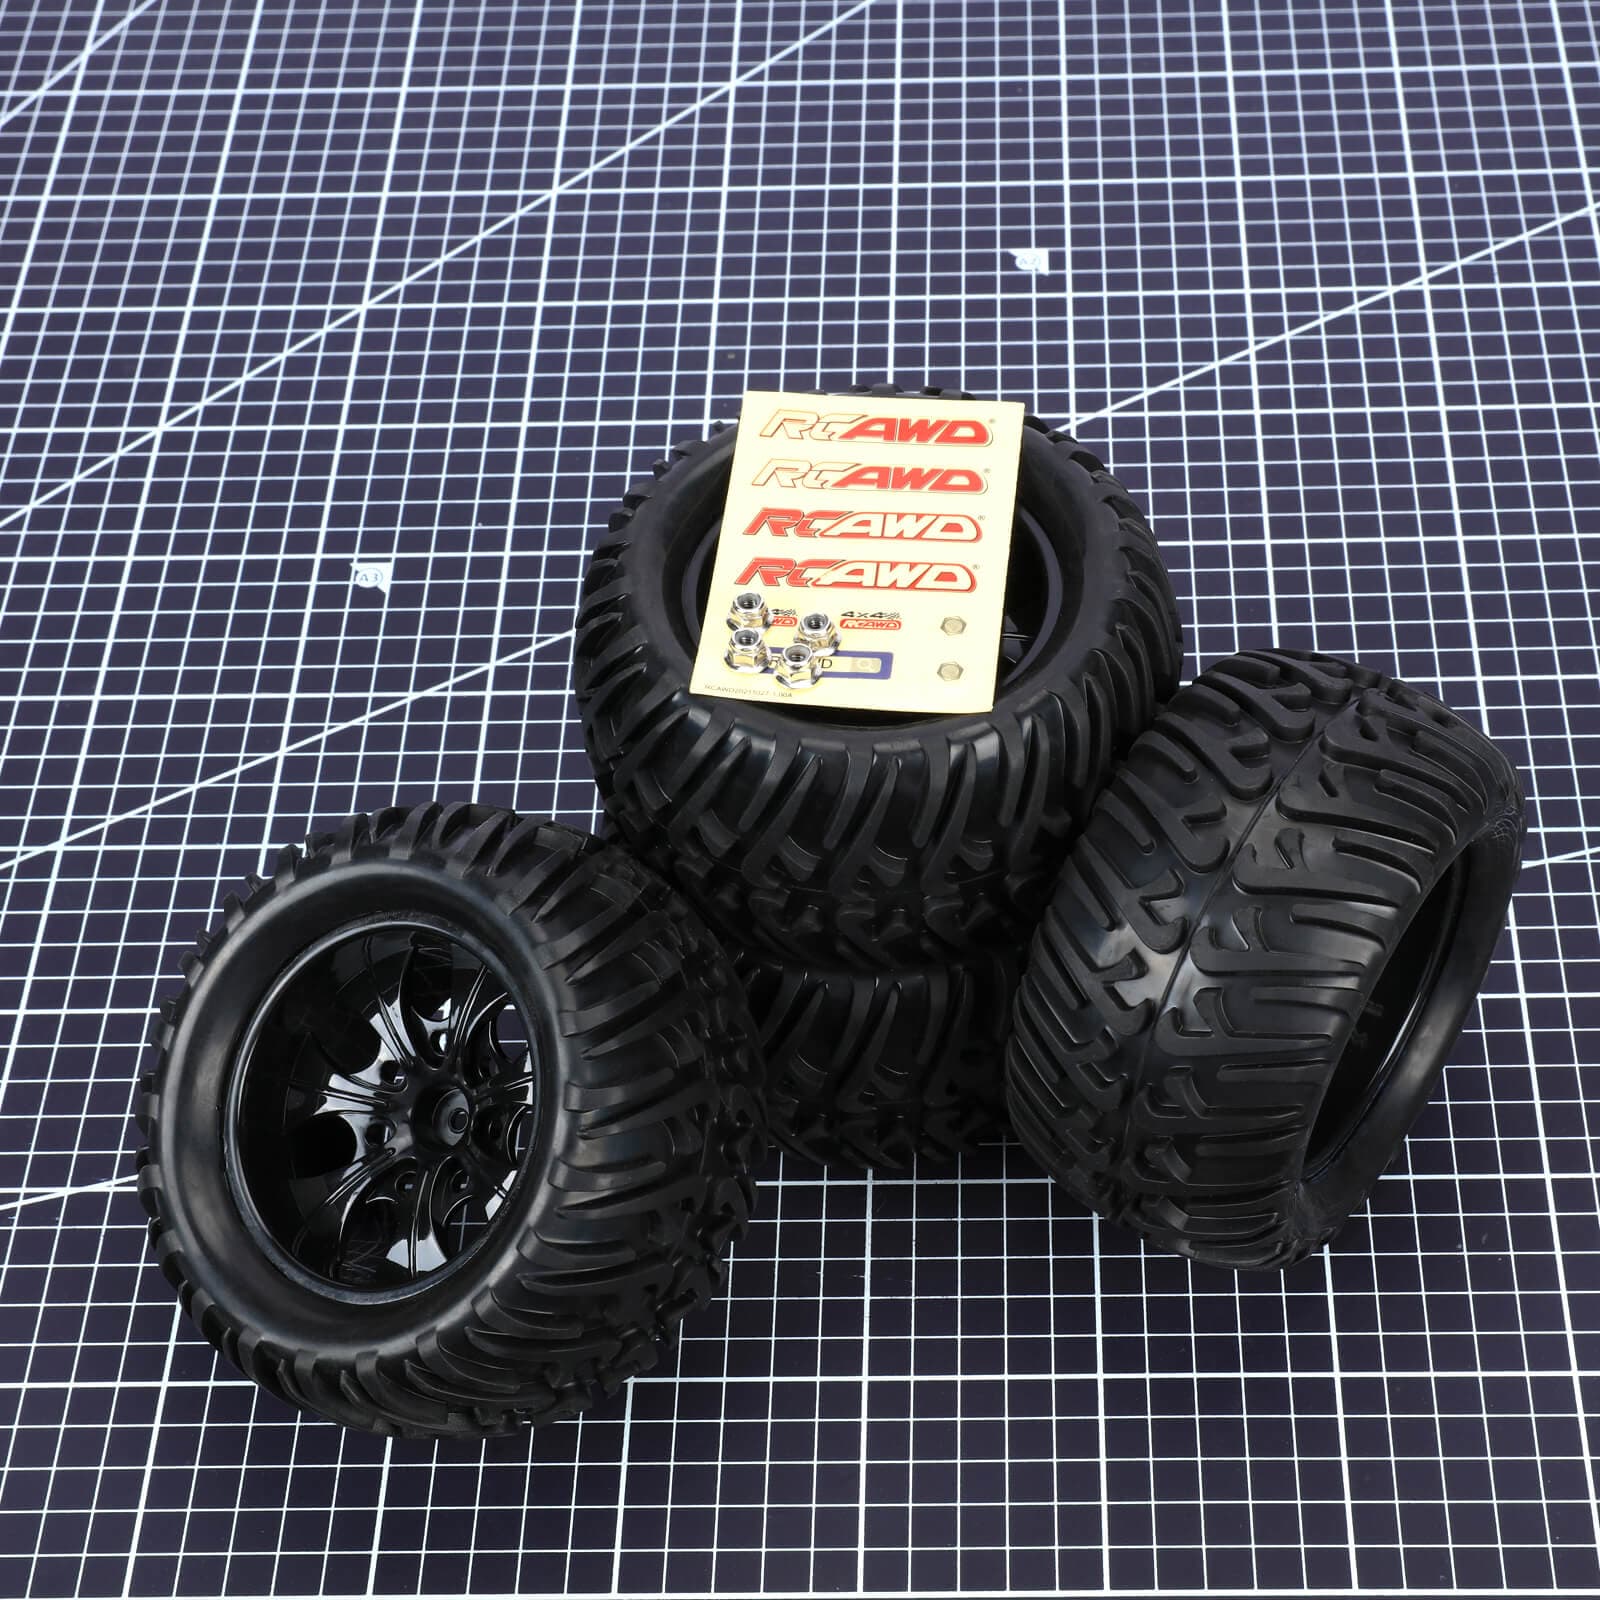 RCAWD Amazon RC Wheel & Tires 7 spokes LG-014BL 1/16 Pre-glued Monster Truck Wheel Tires LG-013BL LG-014BL